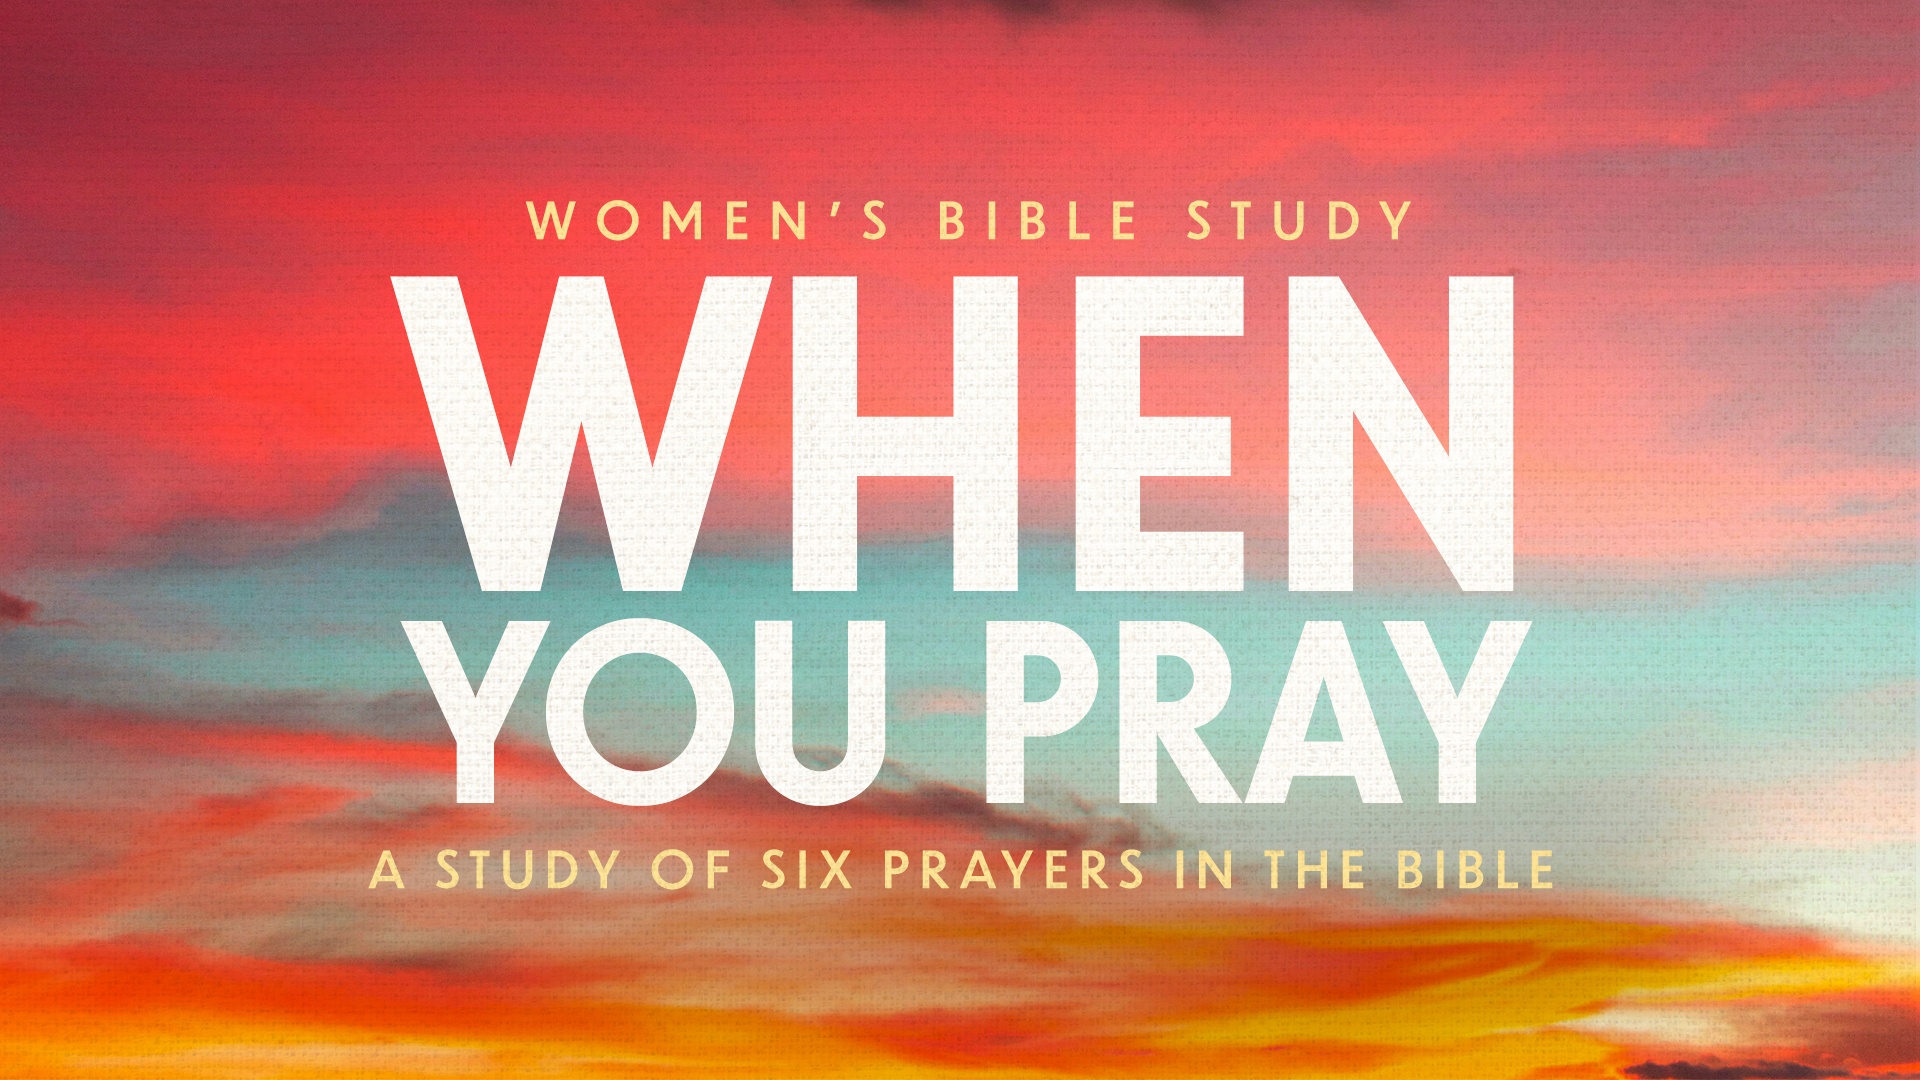 MH Womens Bible Study Comp 1 1